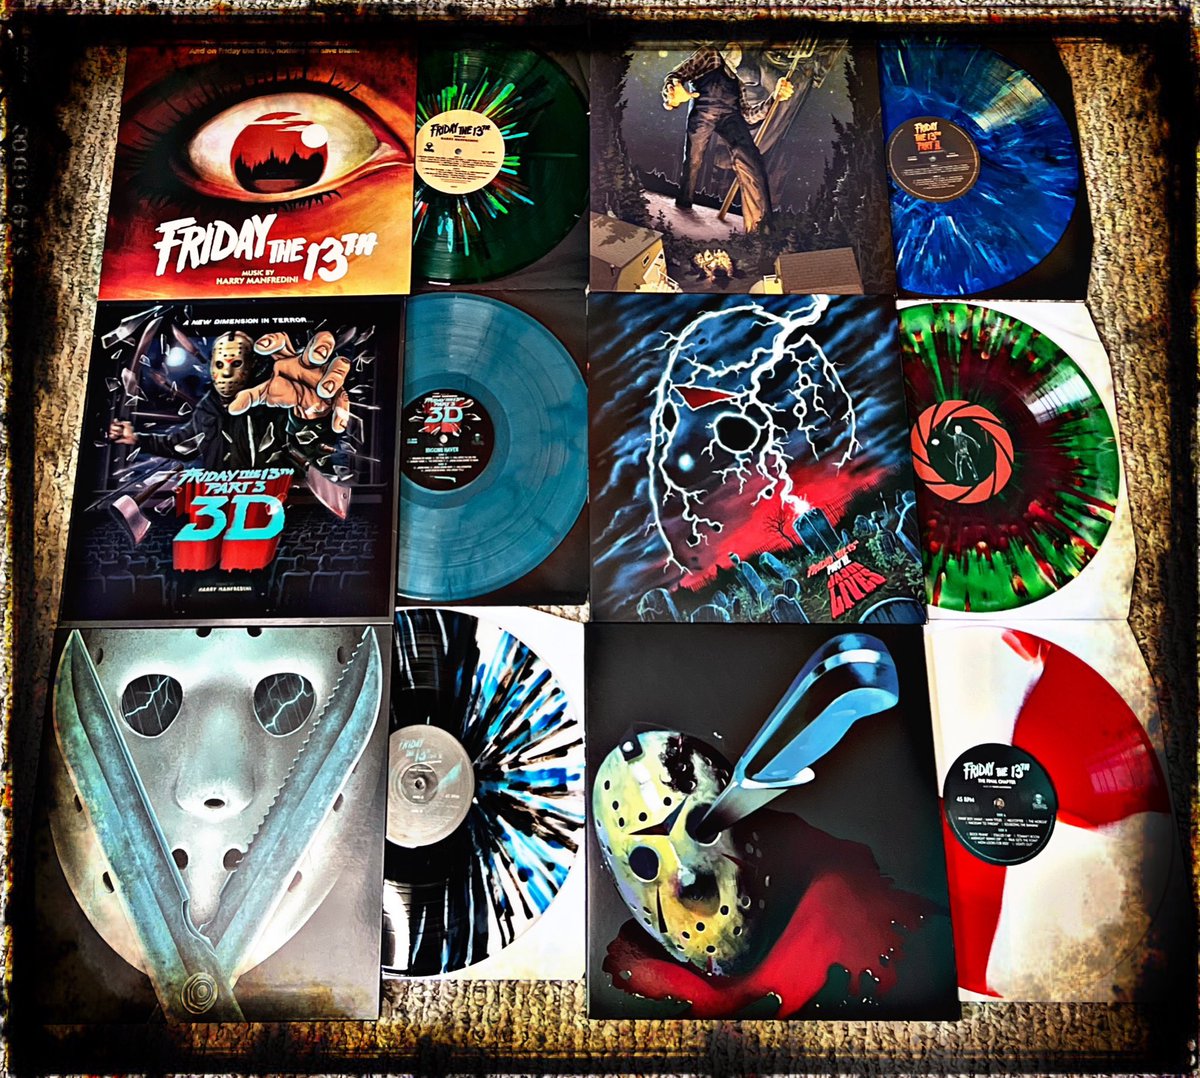 Friday The 13th Parts 1-6 Vinyl Soundtracks. With stellar artwork and killer wax.

#waxworkrecords #fridaythe13th #vinyl #vinylcollector #horror #HorrorArt #HorrorCommunity #JasonVoorhees #80shorror